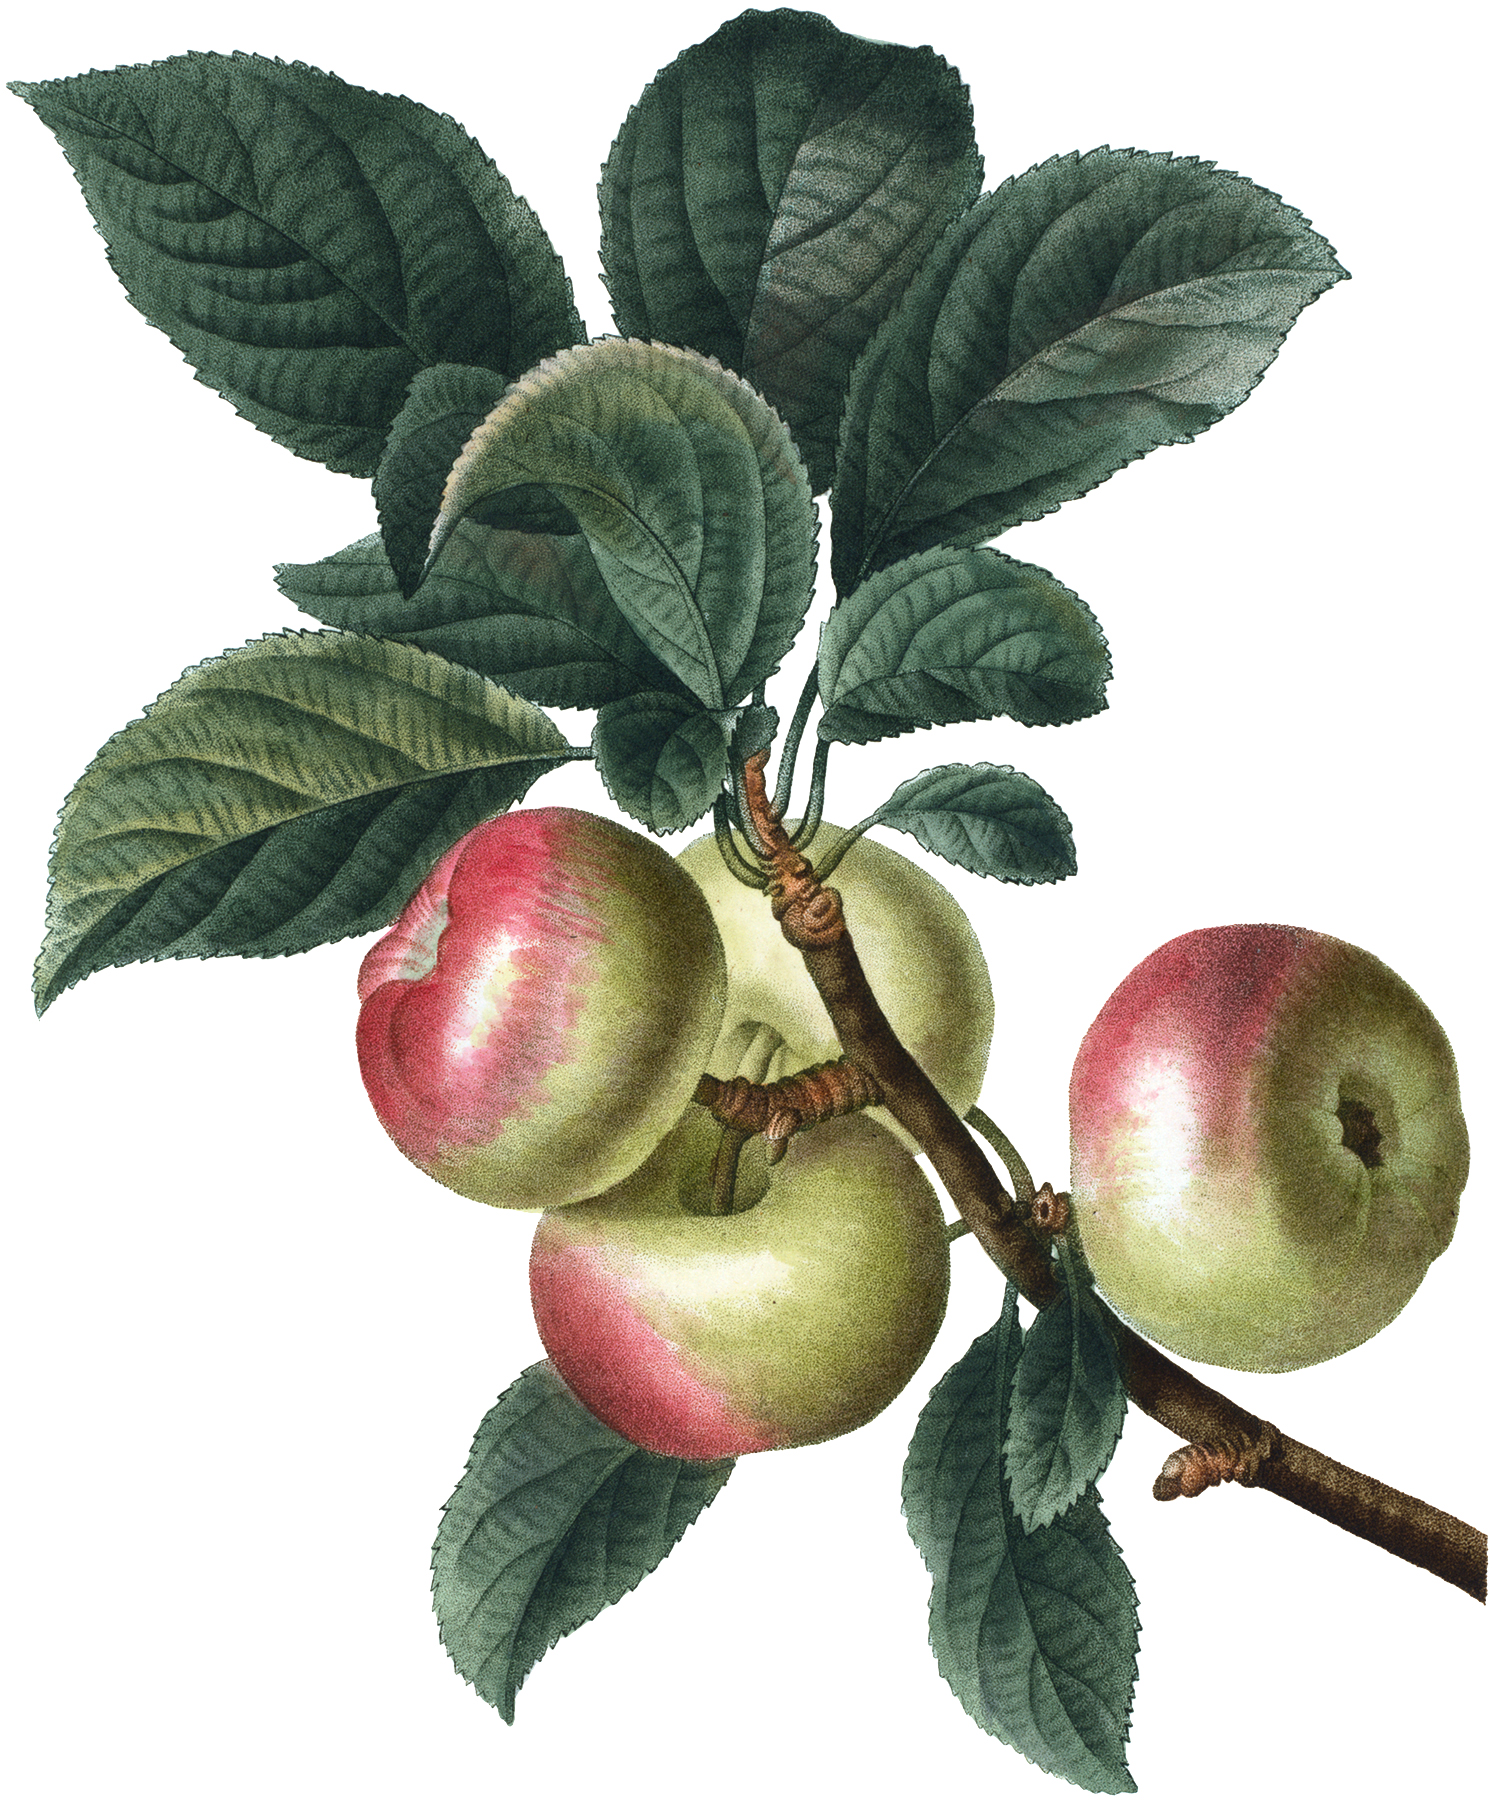 https://thegraphicsfairy.com/wp-content/uploads/2016/09/Botanical-Apples-Image-GraphicsFairy.jpg